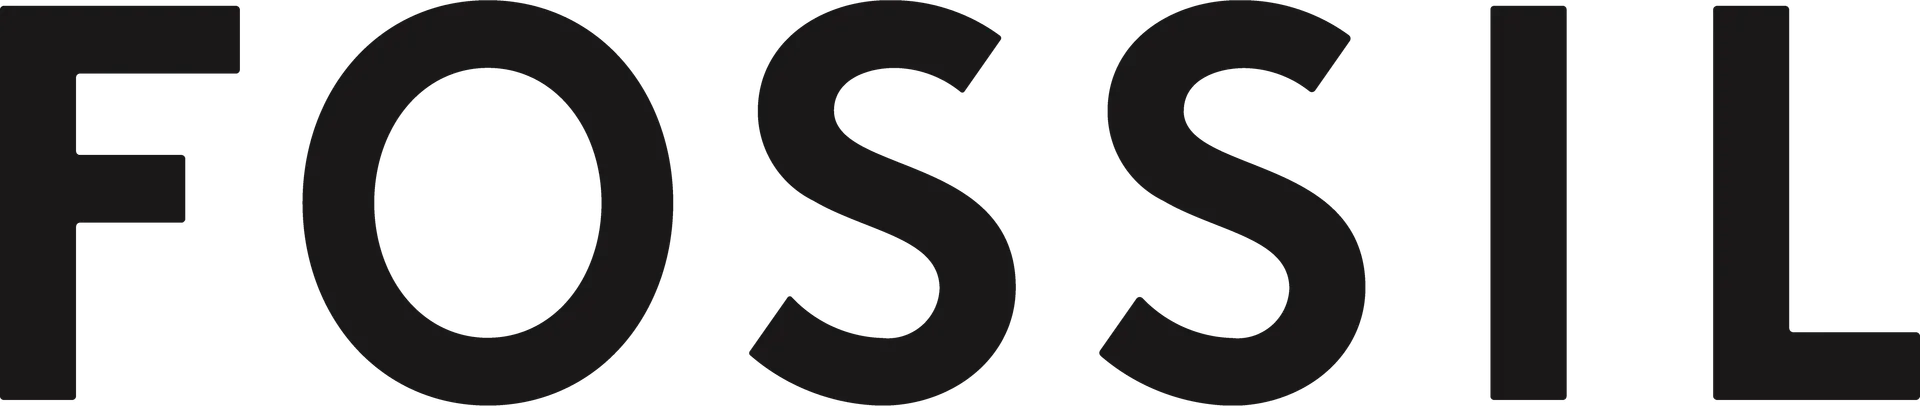 FOSSIL logo